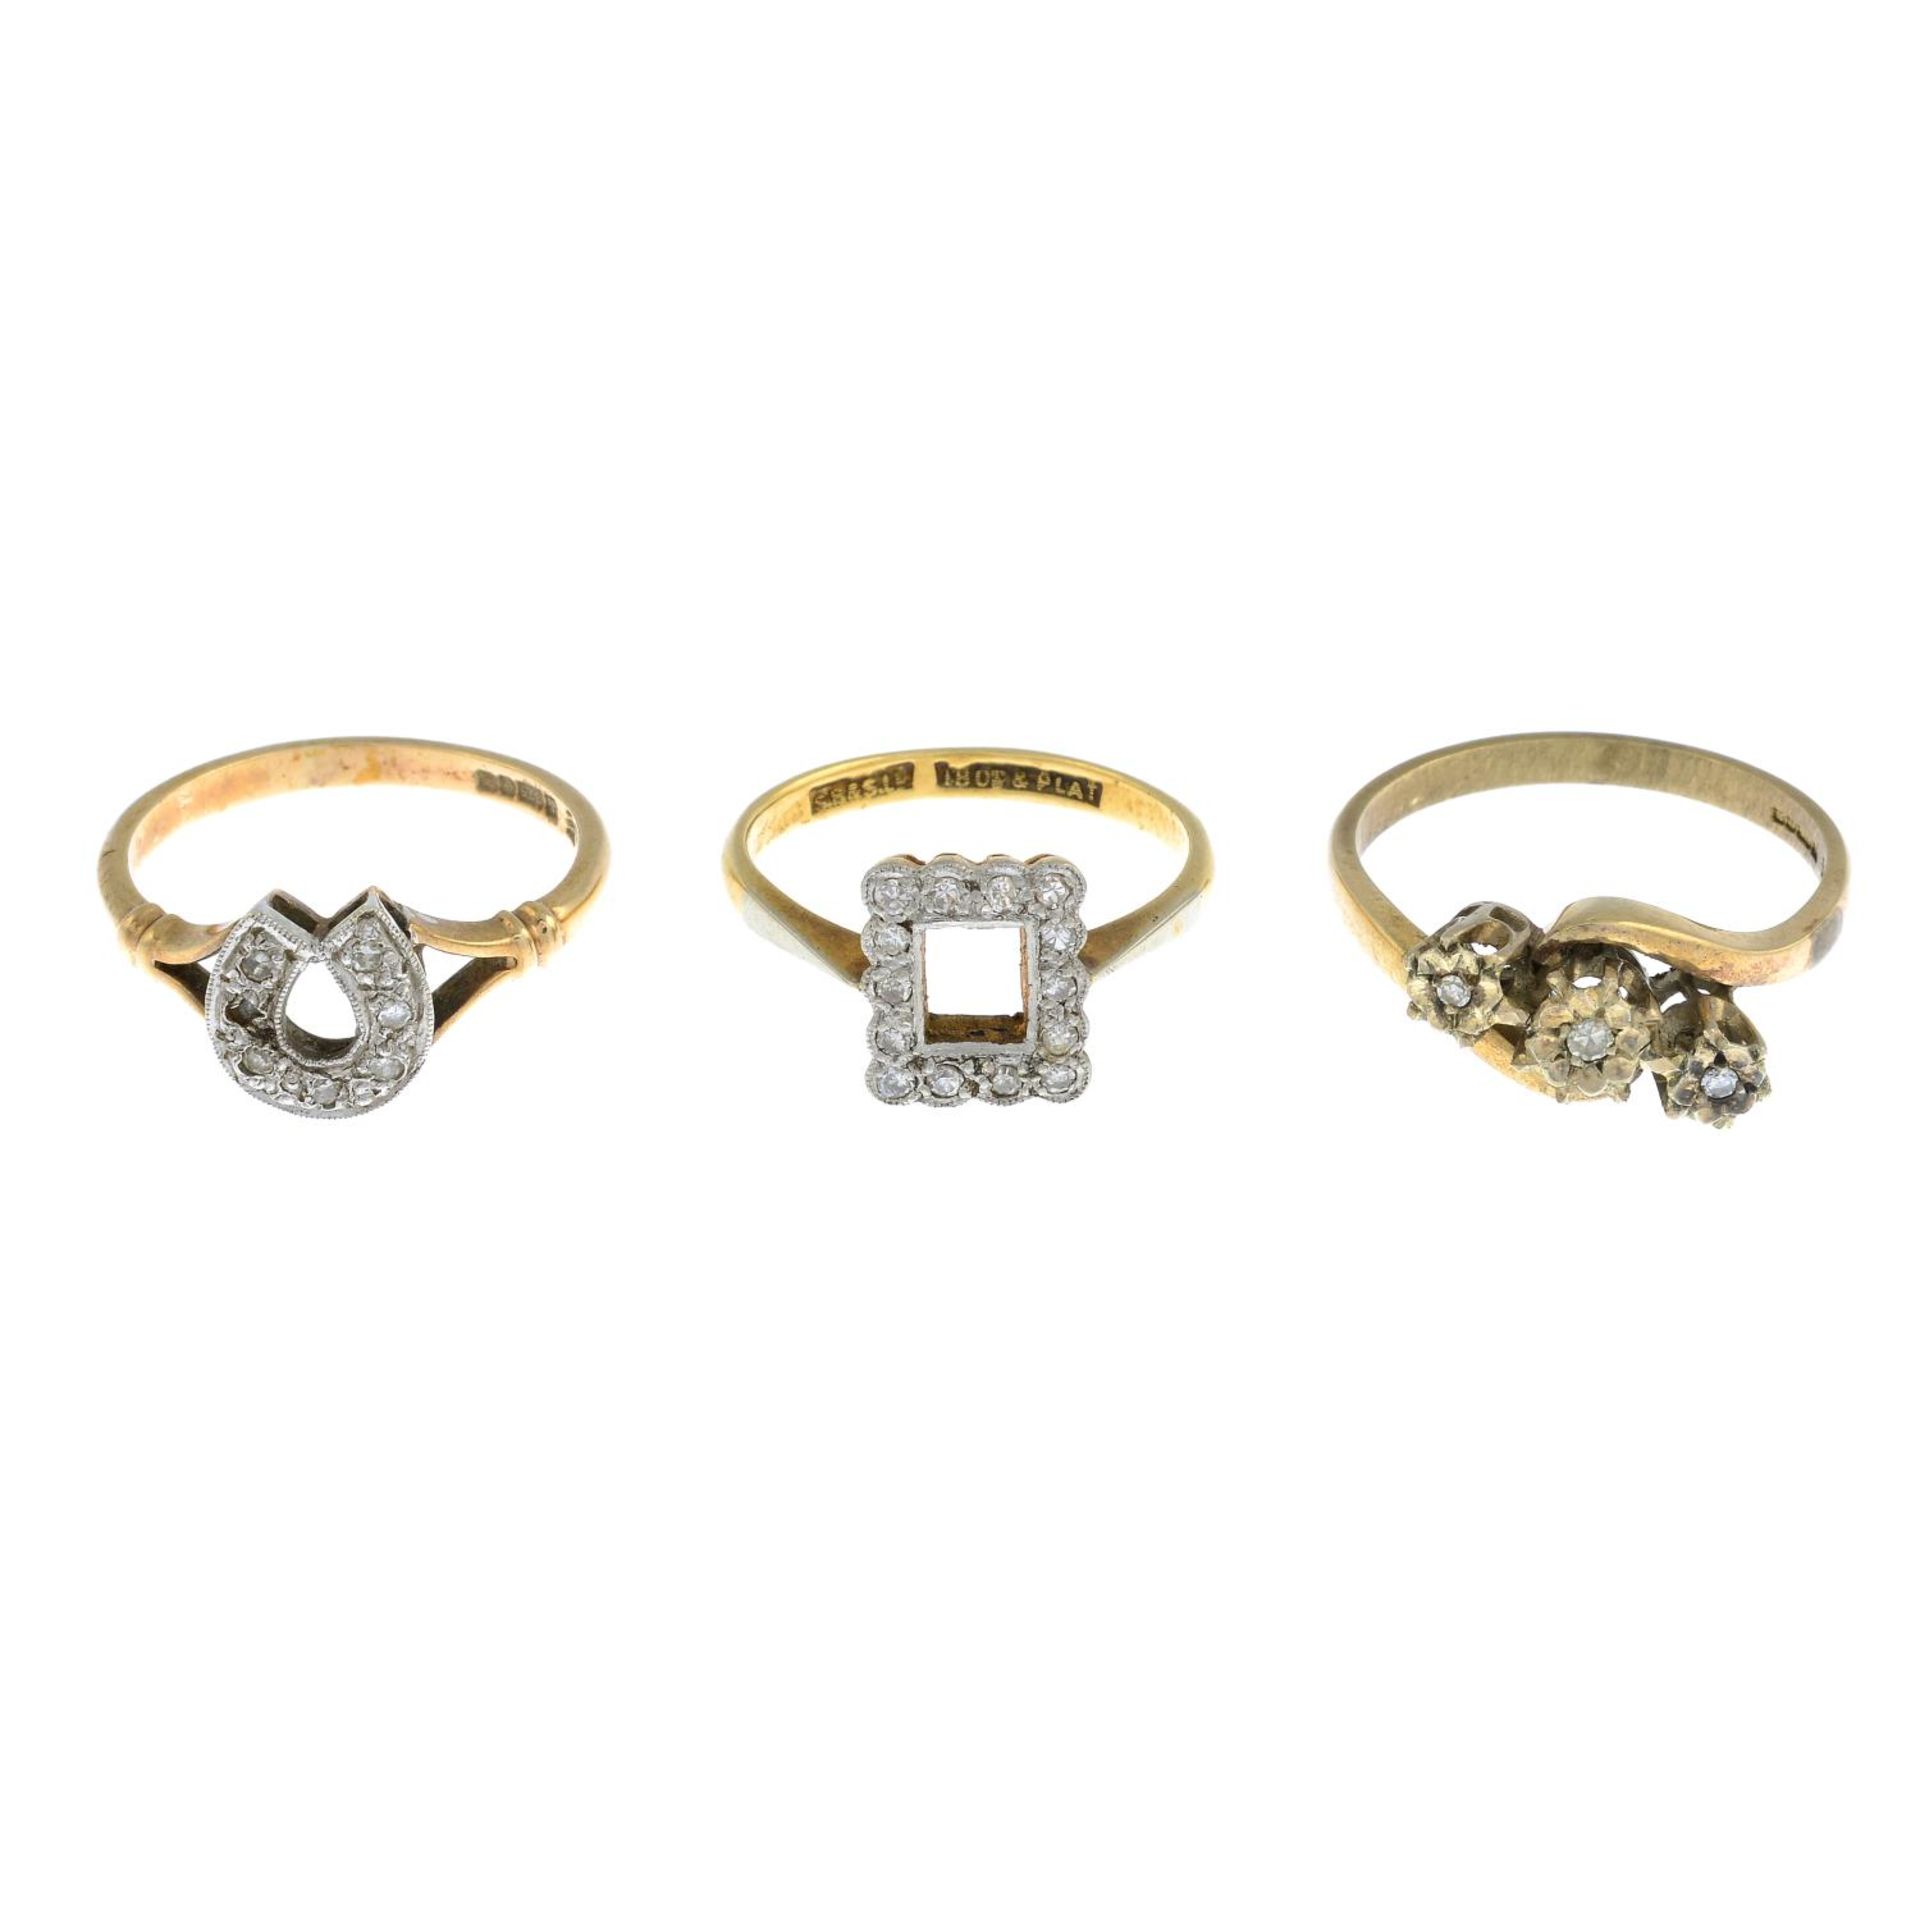 Early 20th century 9ct gold single-cut diamond ring mount,